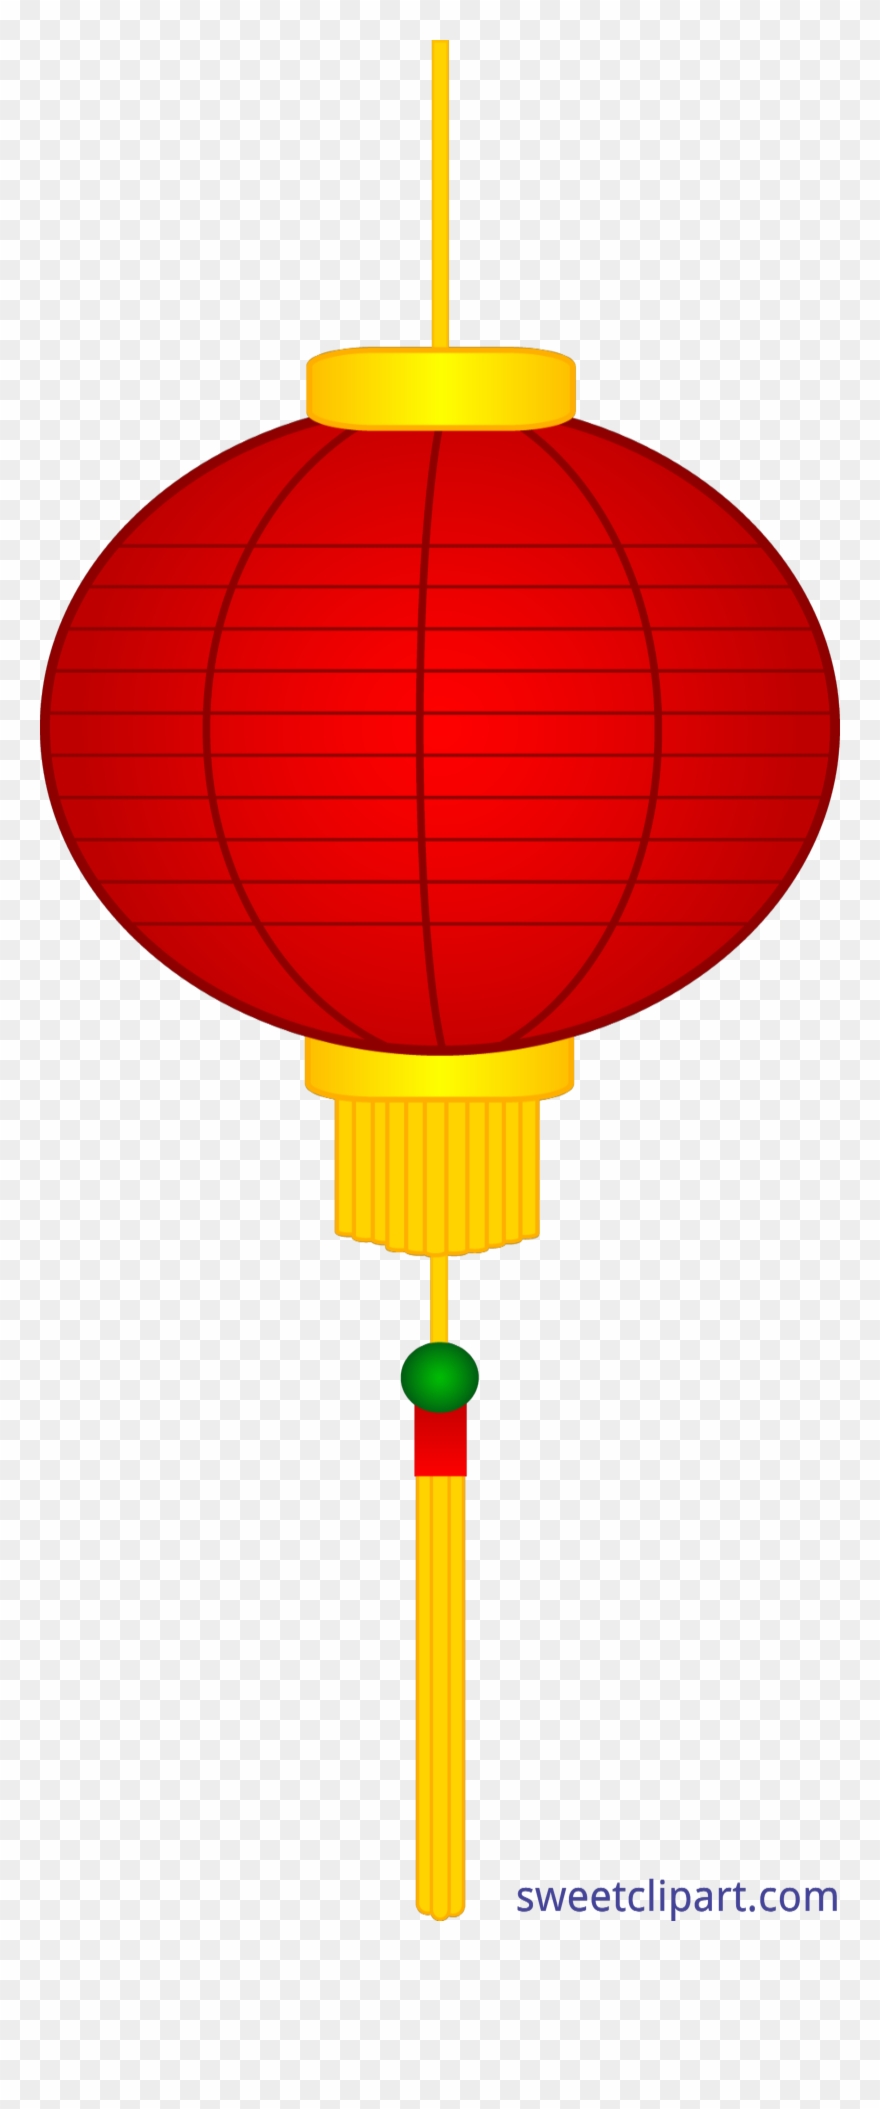 Chinese lamps lantern free. Lamp clipart red orange